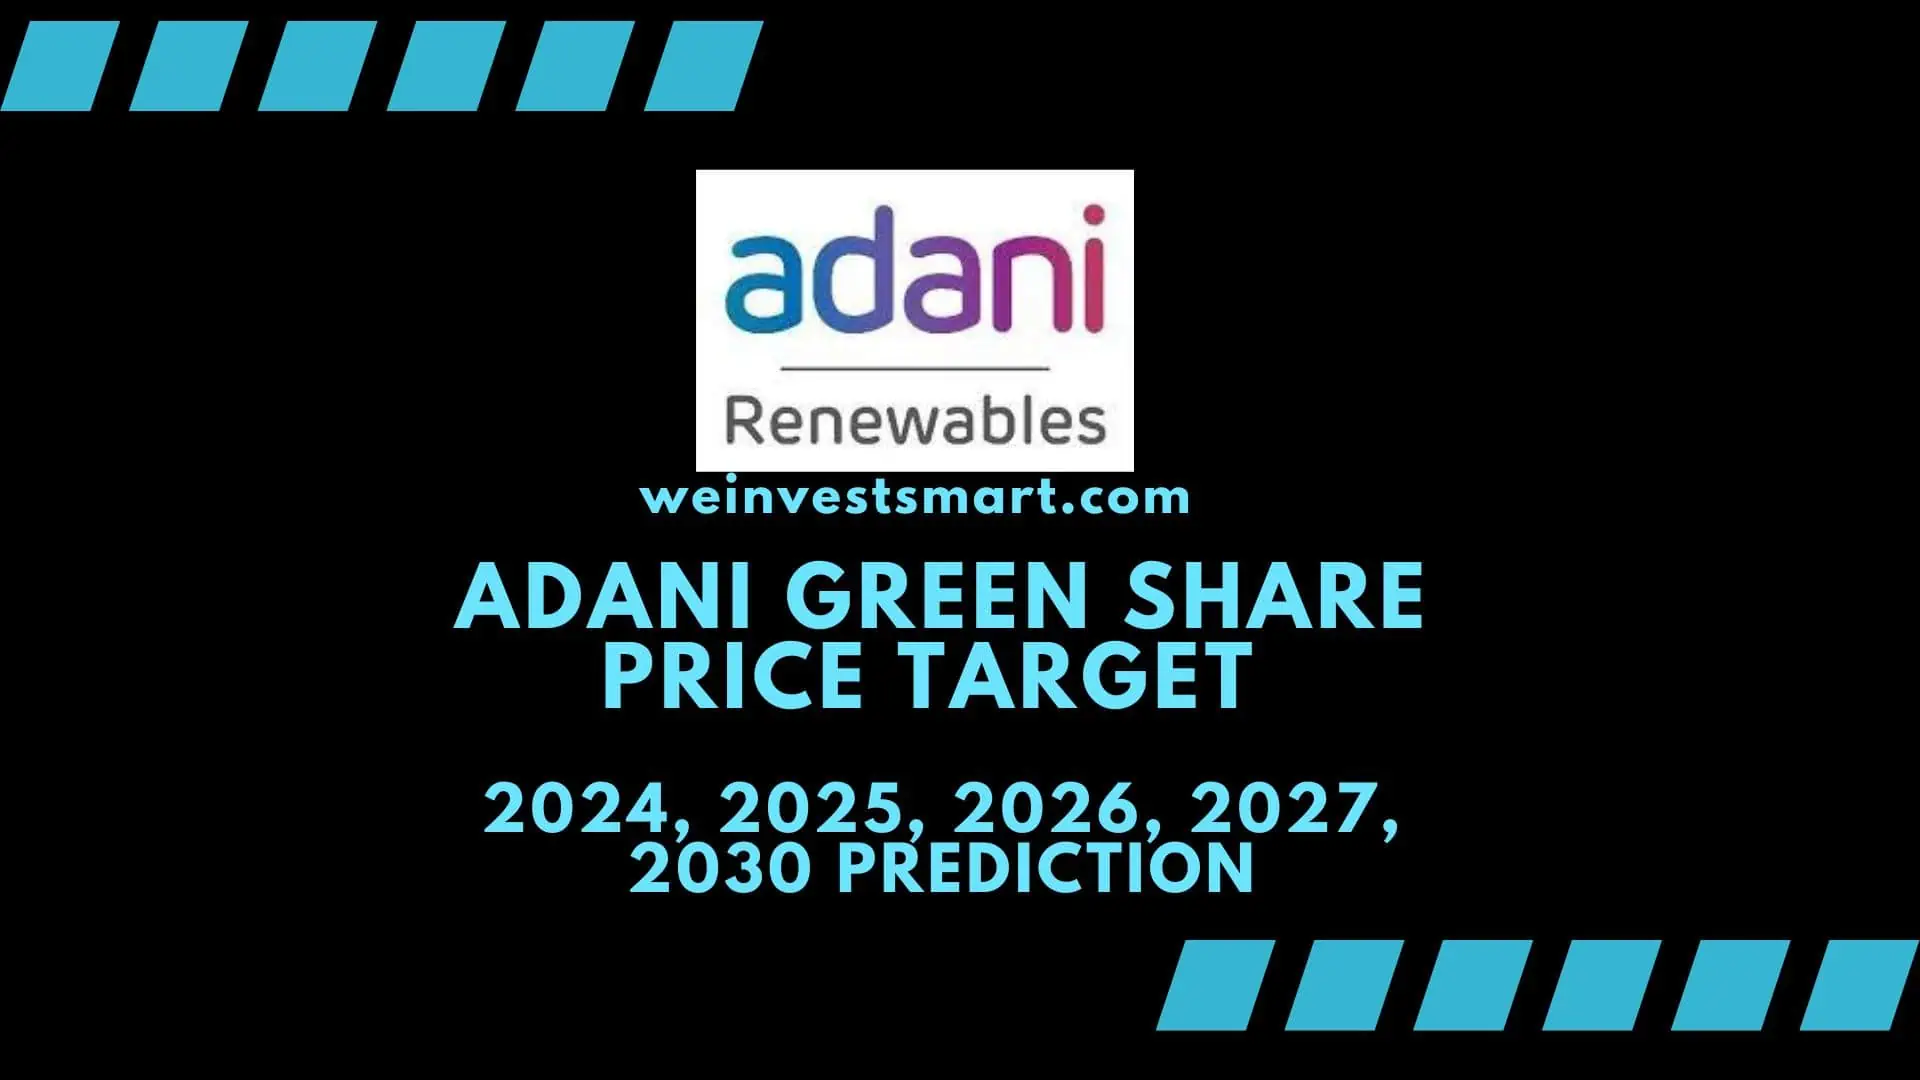 Adani Green share price target 2024, 2025, 2026, 2027, 2030 prediction